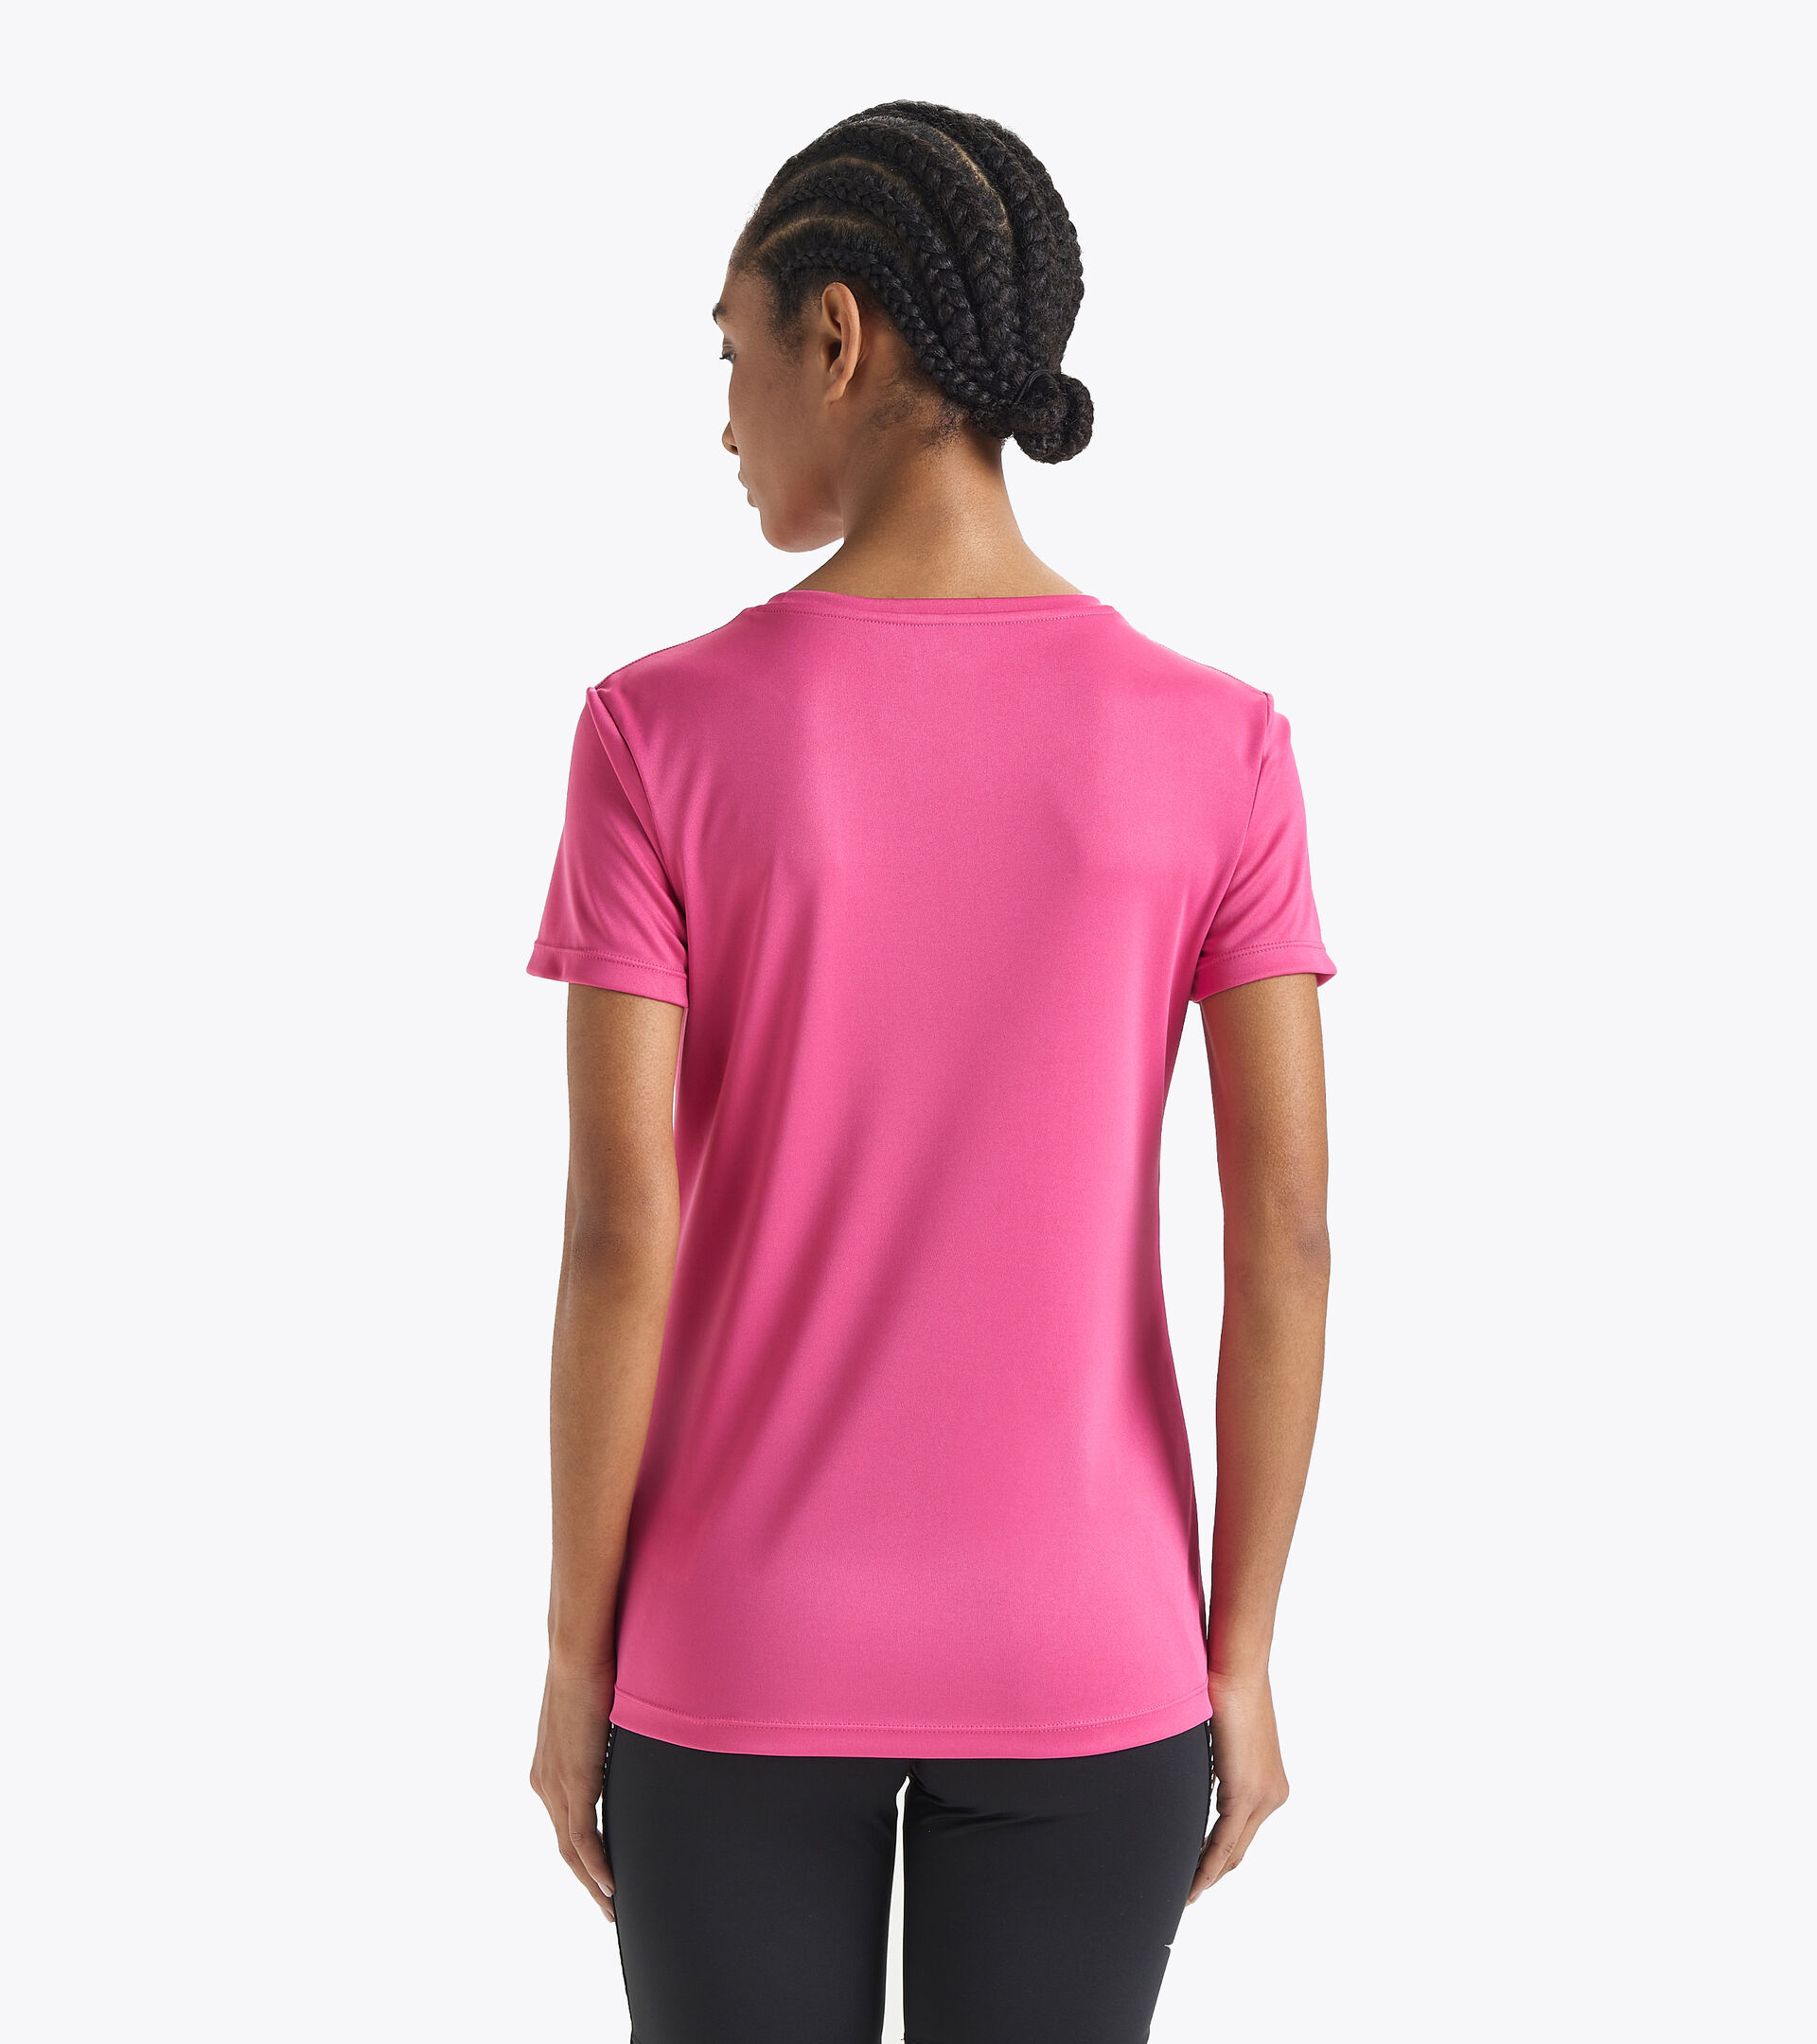 Camiseta para correr - Mujer L. SS T-SHIRT RUN ROSADO AQUILEA - Diadora